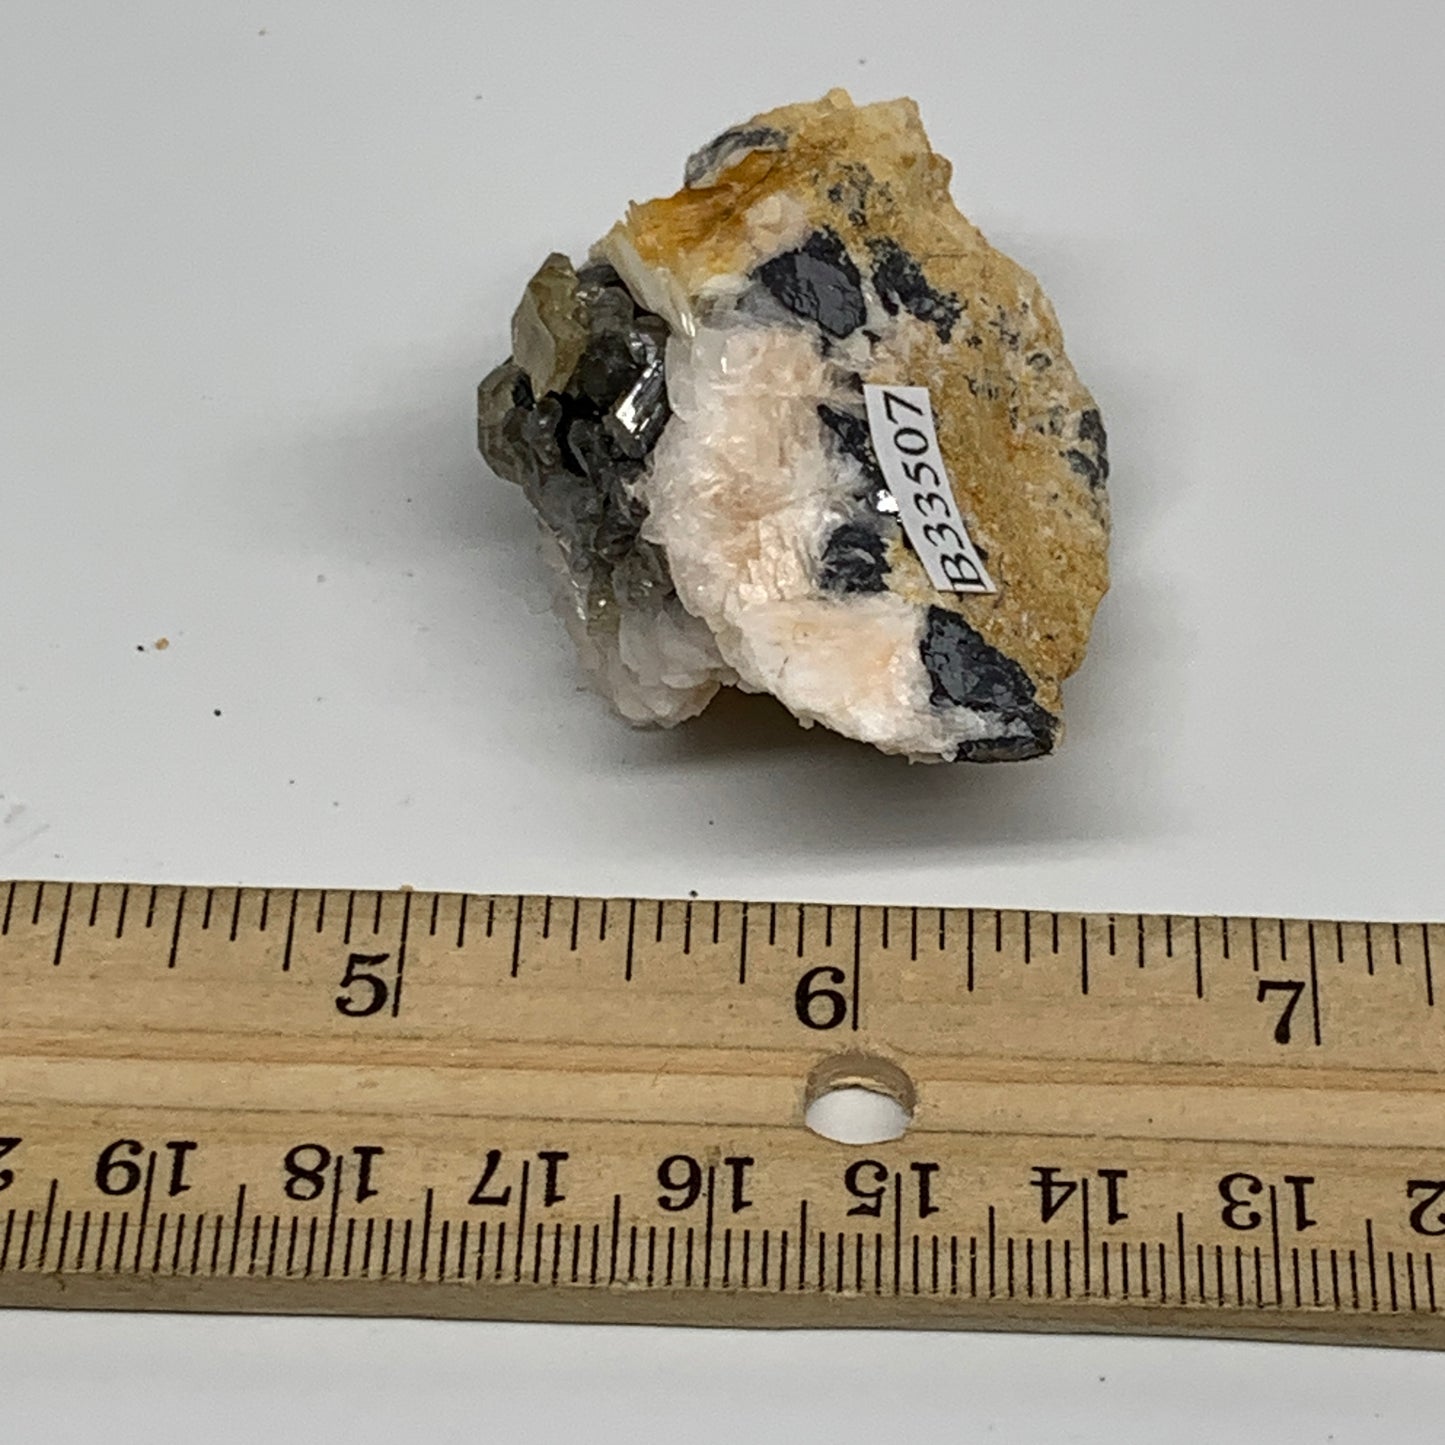 68.8g, 2"x1.5x0.8", Natural Golden Barite Mineral Specimen @Morocco, B33507